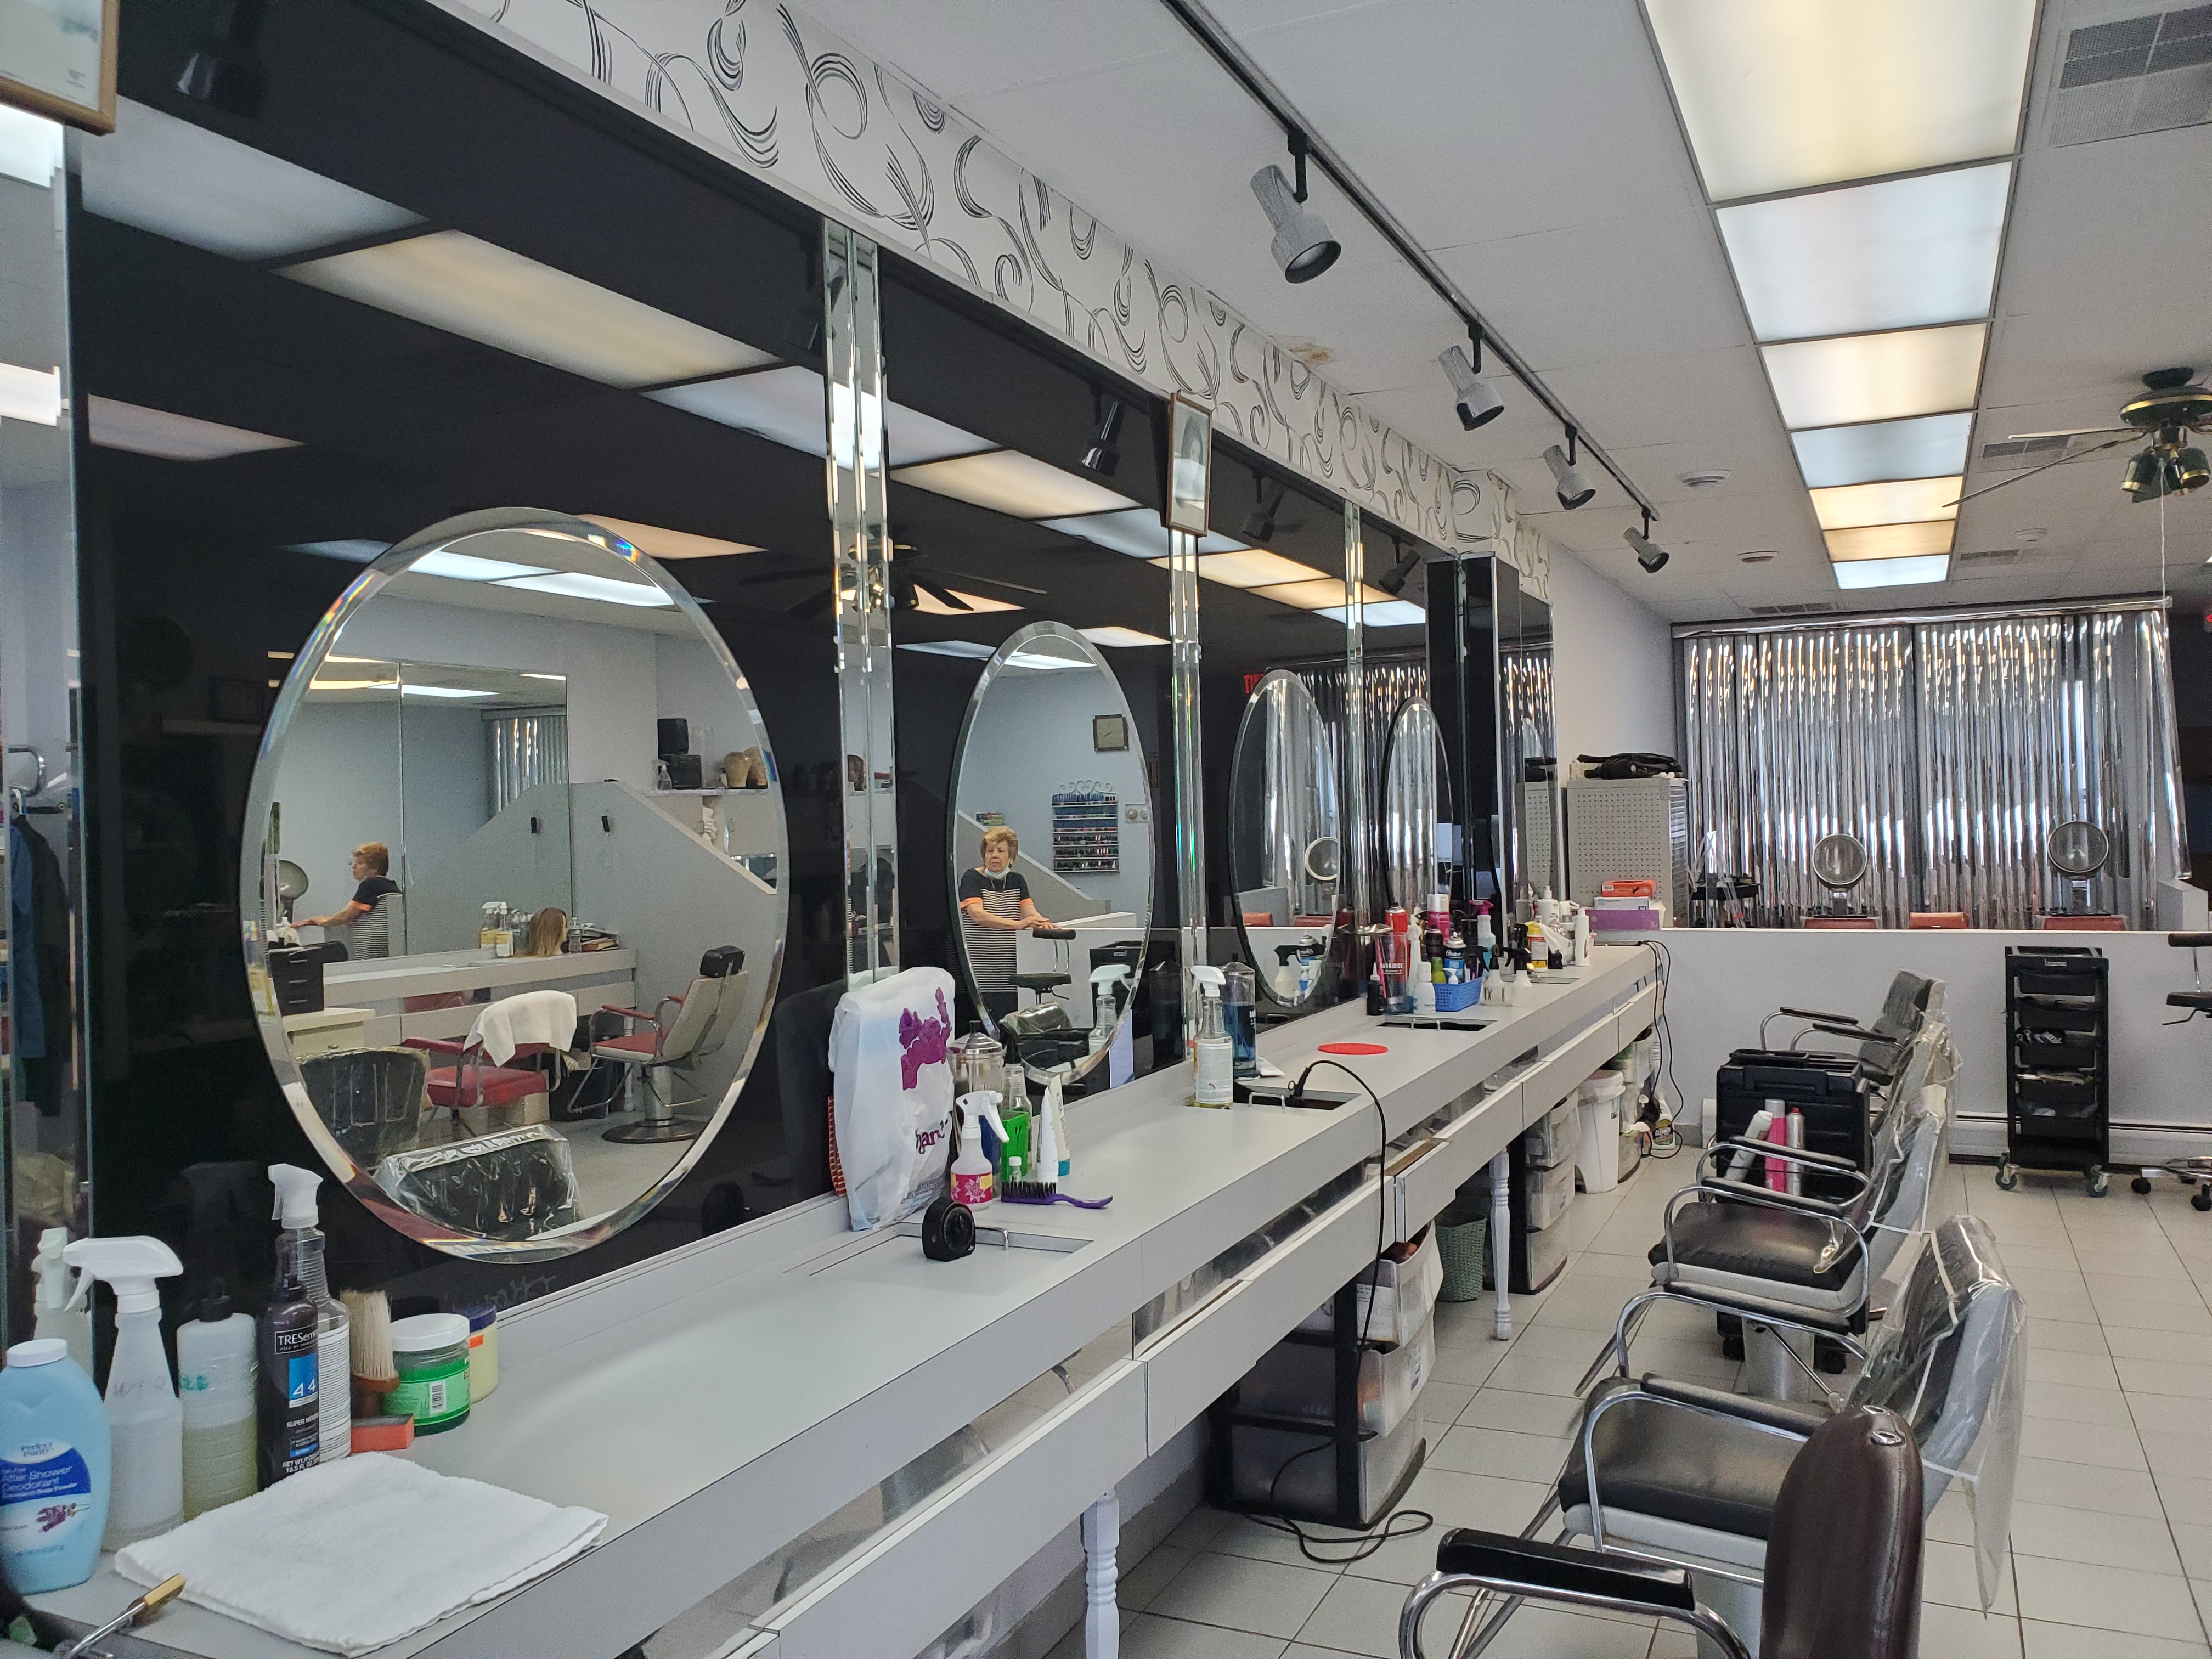 Local Beauty Salon for sale in NJ